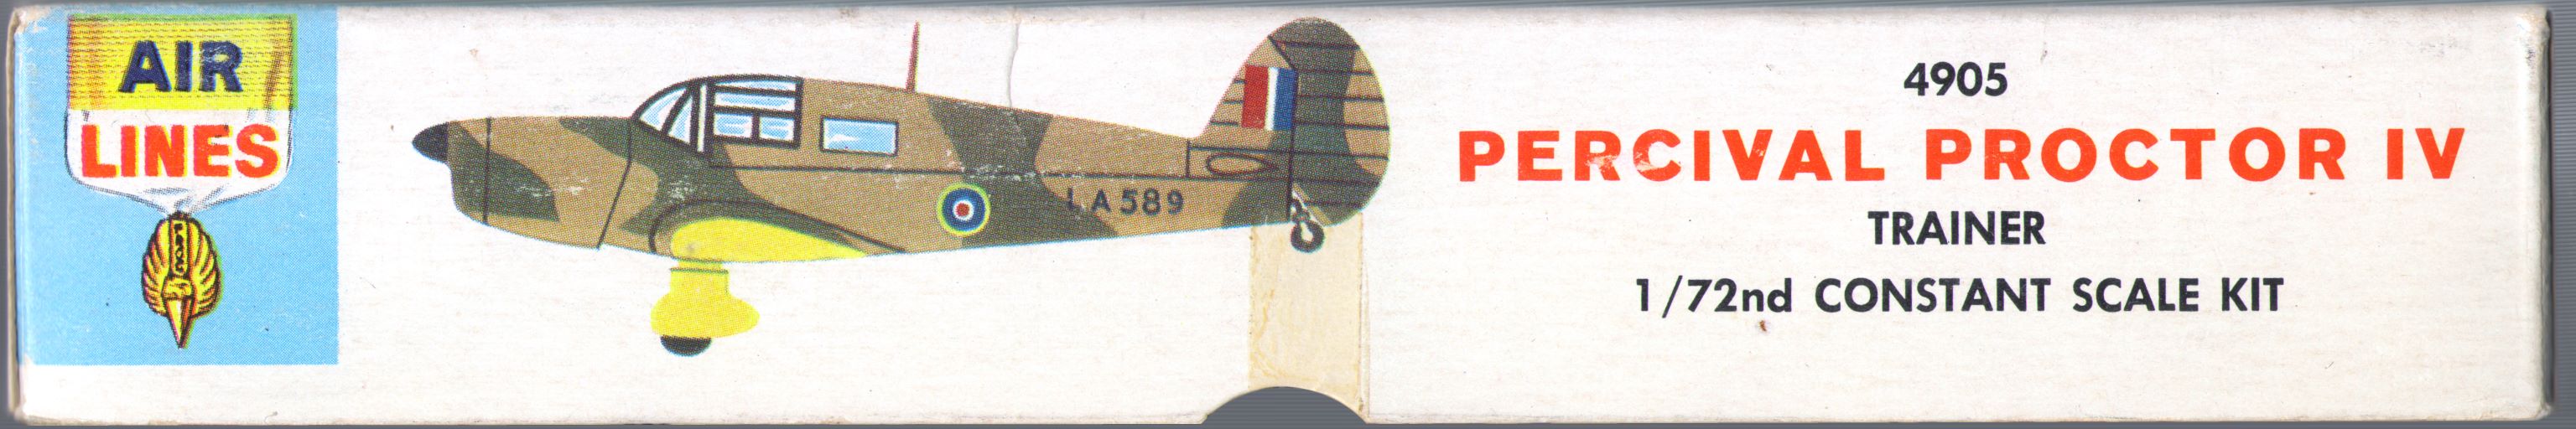 Air Lines 4905 Percival Proctor IV, Lines Bros. Inc., 1964, box